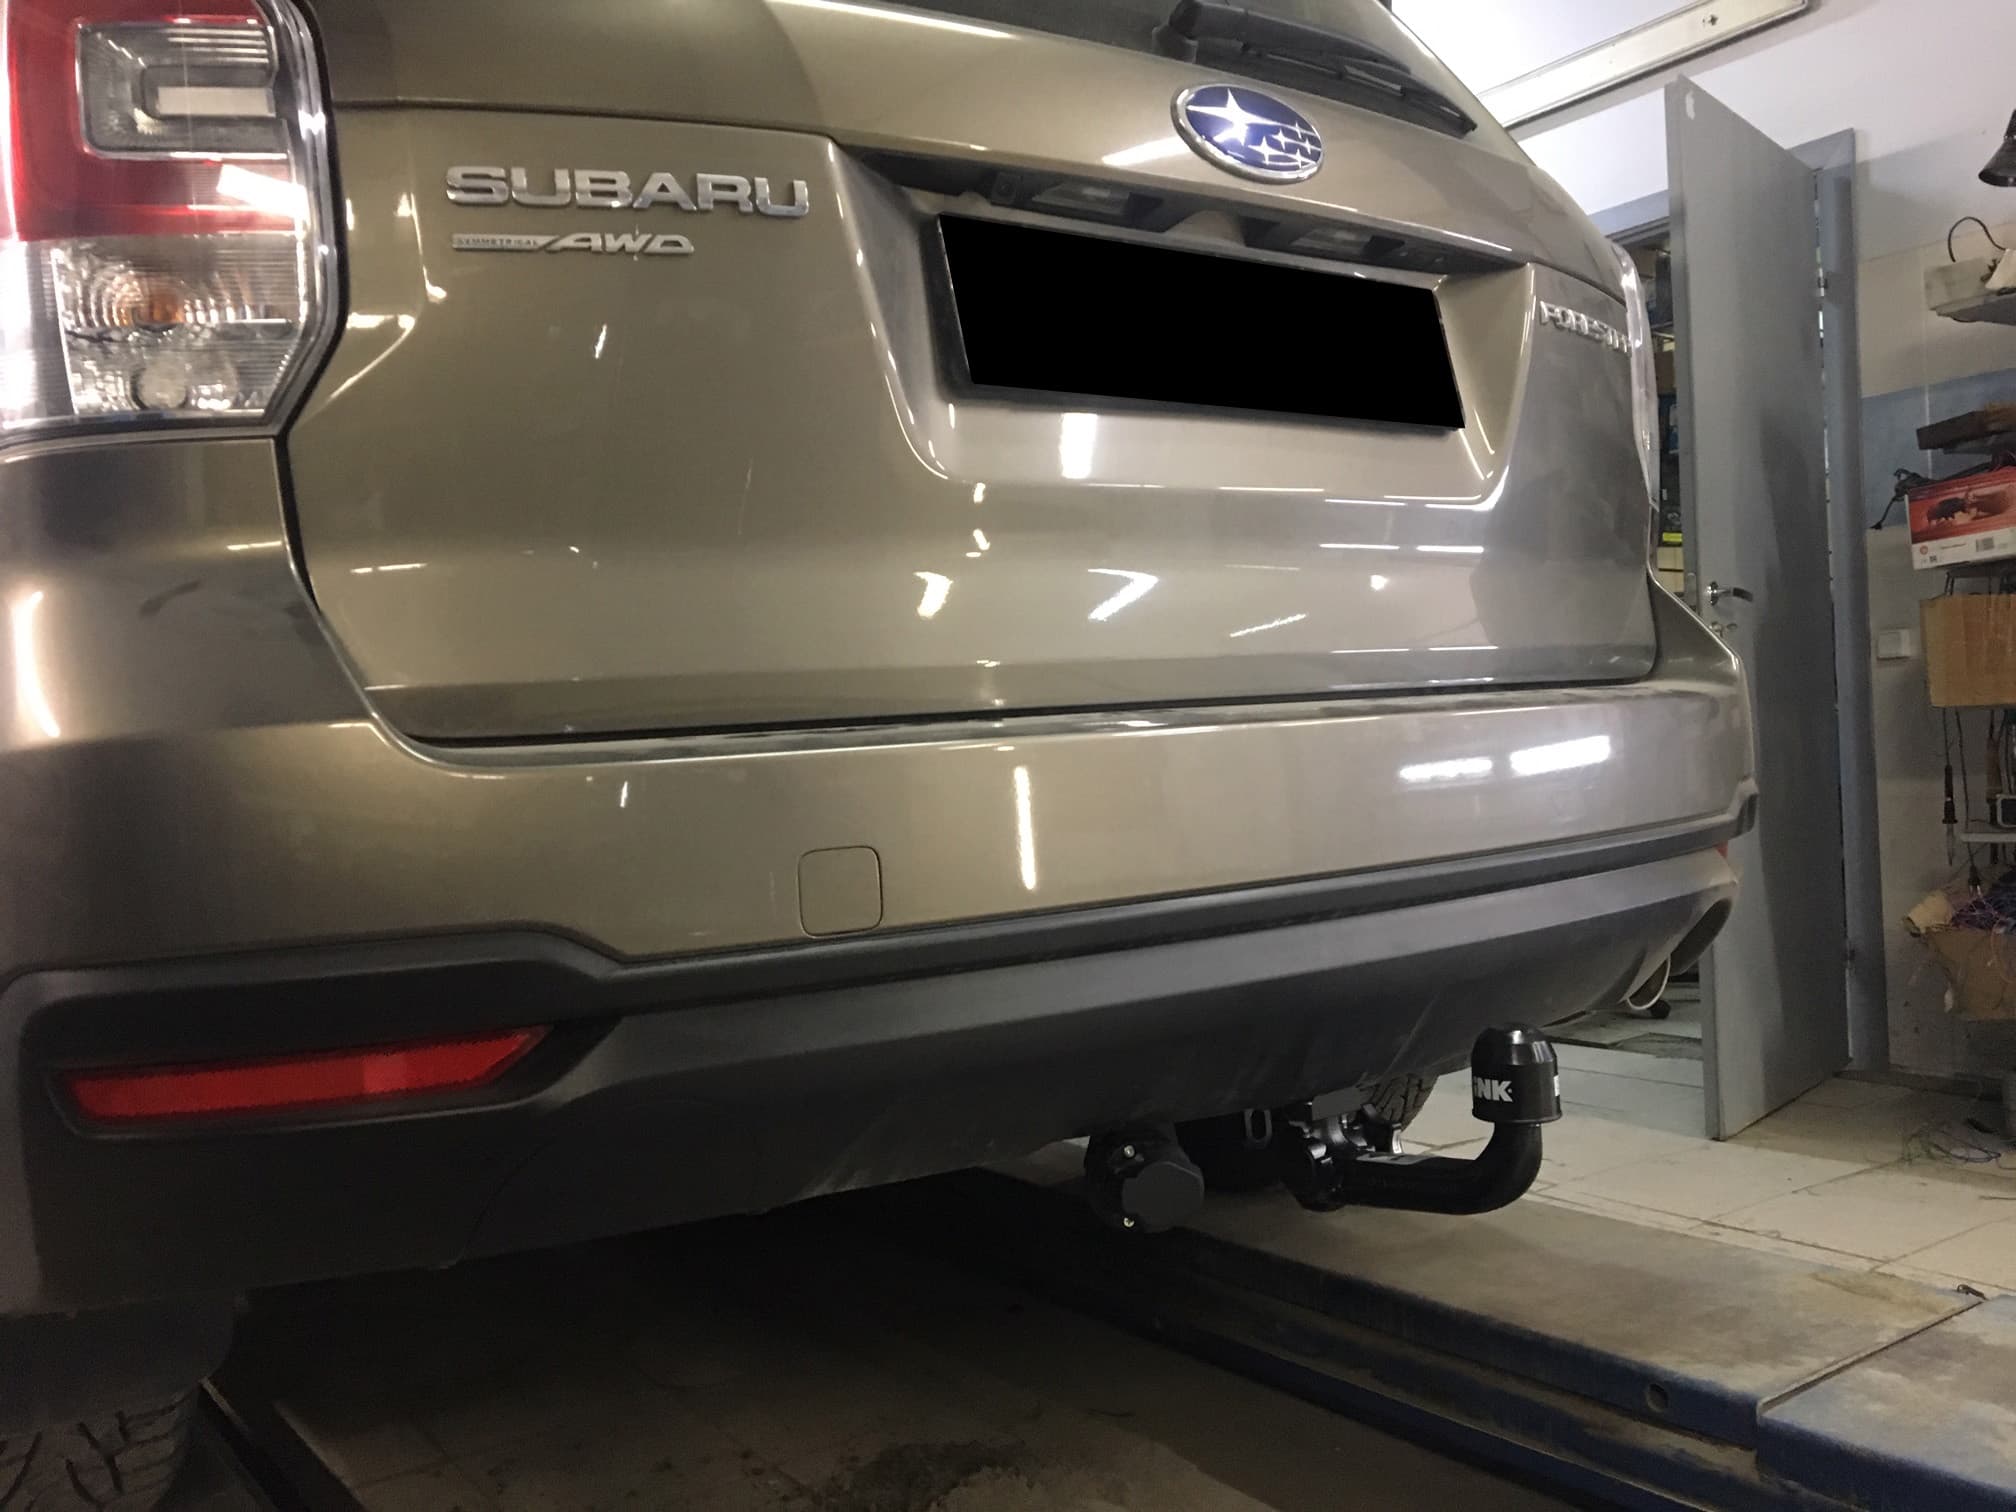 Съемный фаркоп Brink для Subaru Forester (03.2013-10.2019)